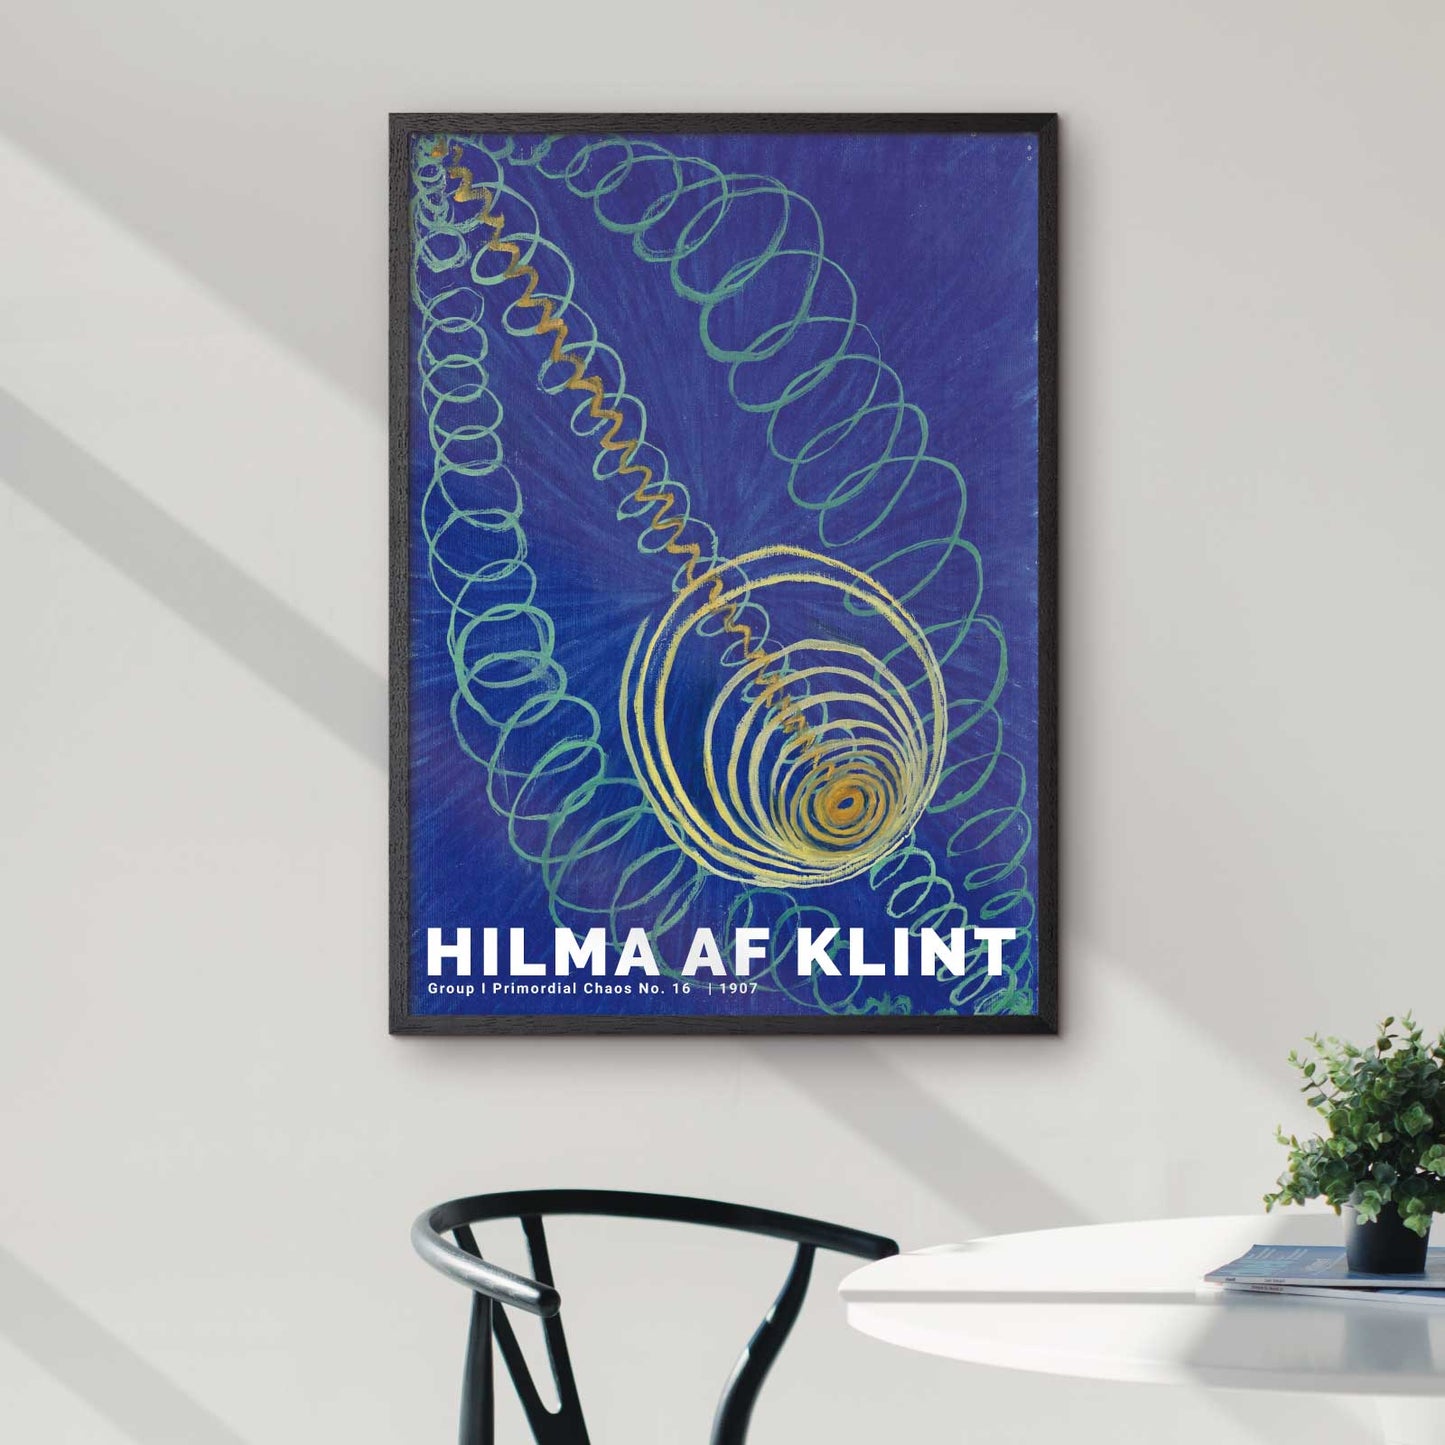 Art poster feat. Hilma af Klint "Primordial Chaos No. 16"